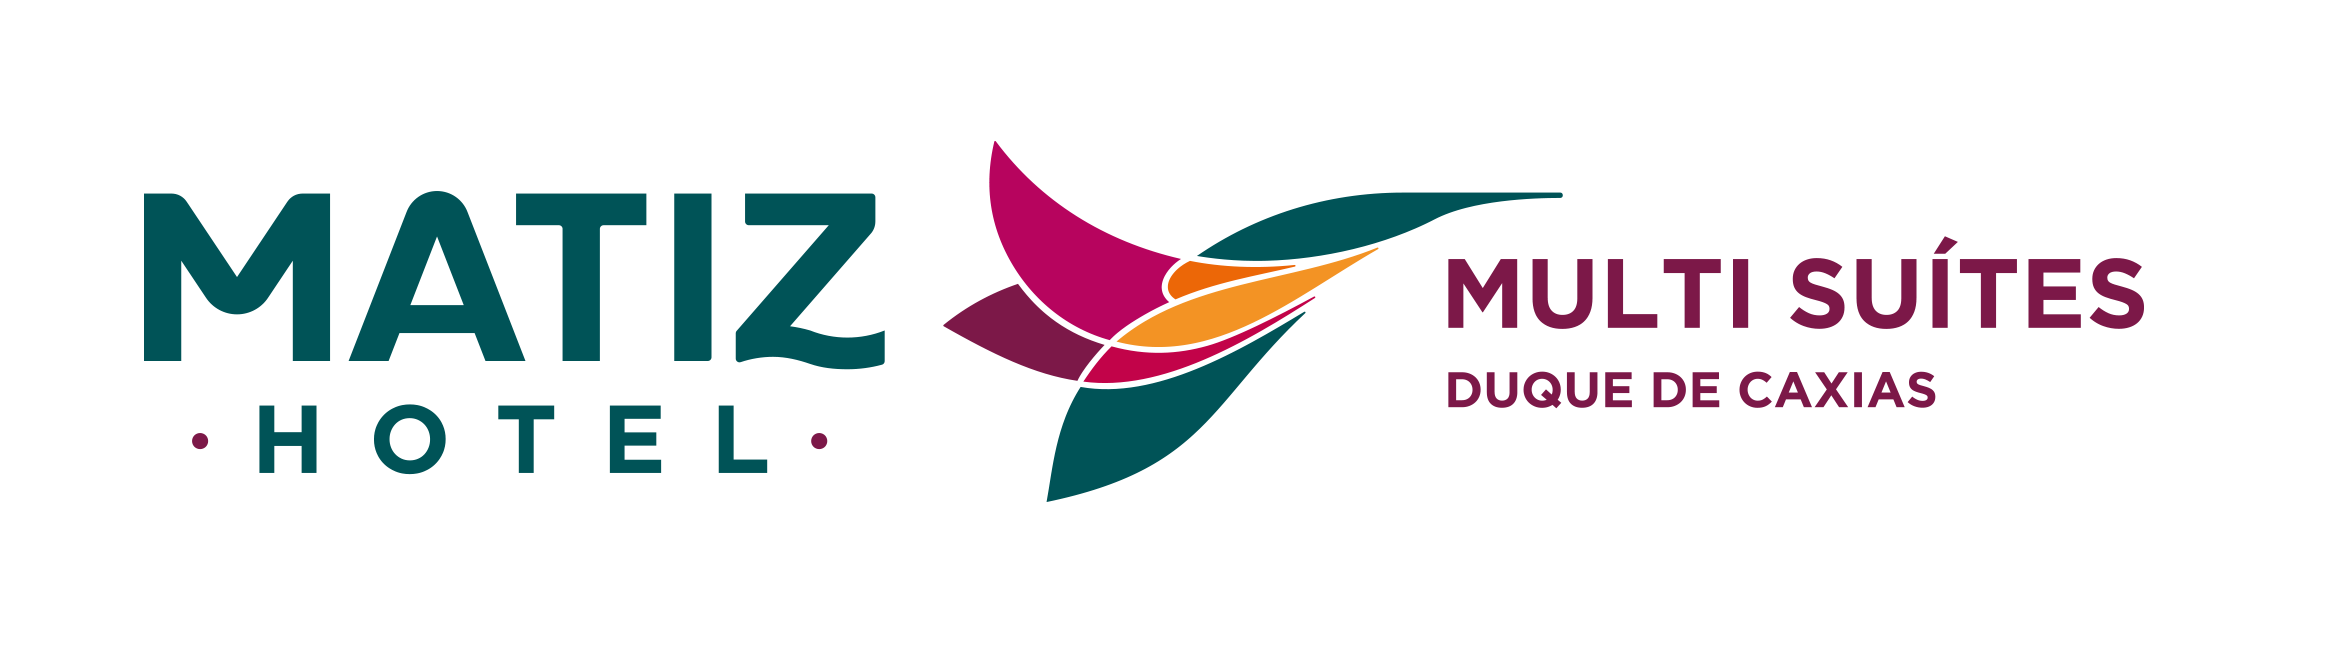 matiz_multi_suites_logo_horizontal_colorido_fundo_transparente